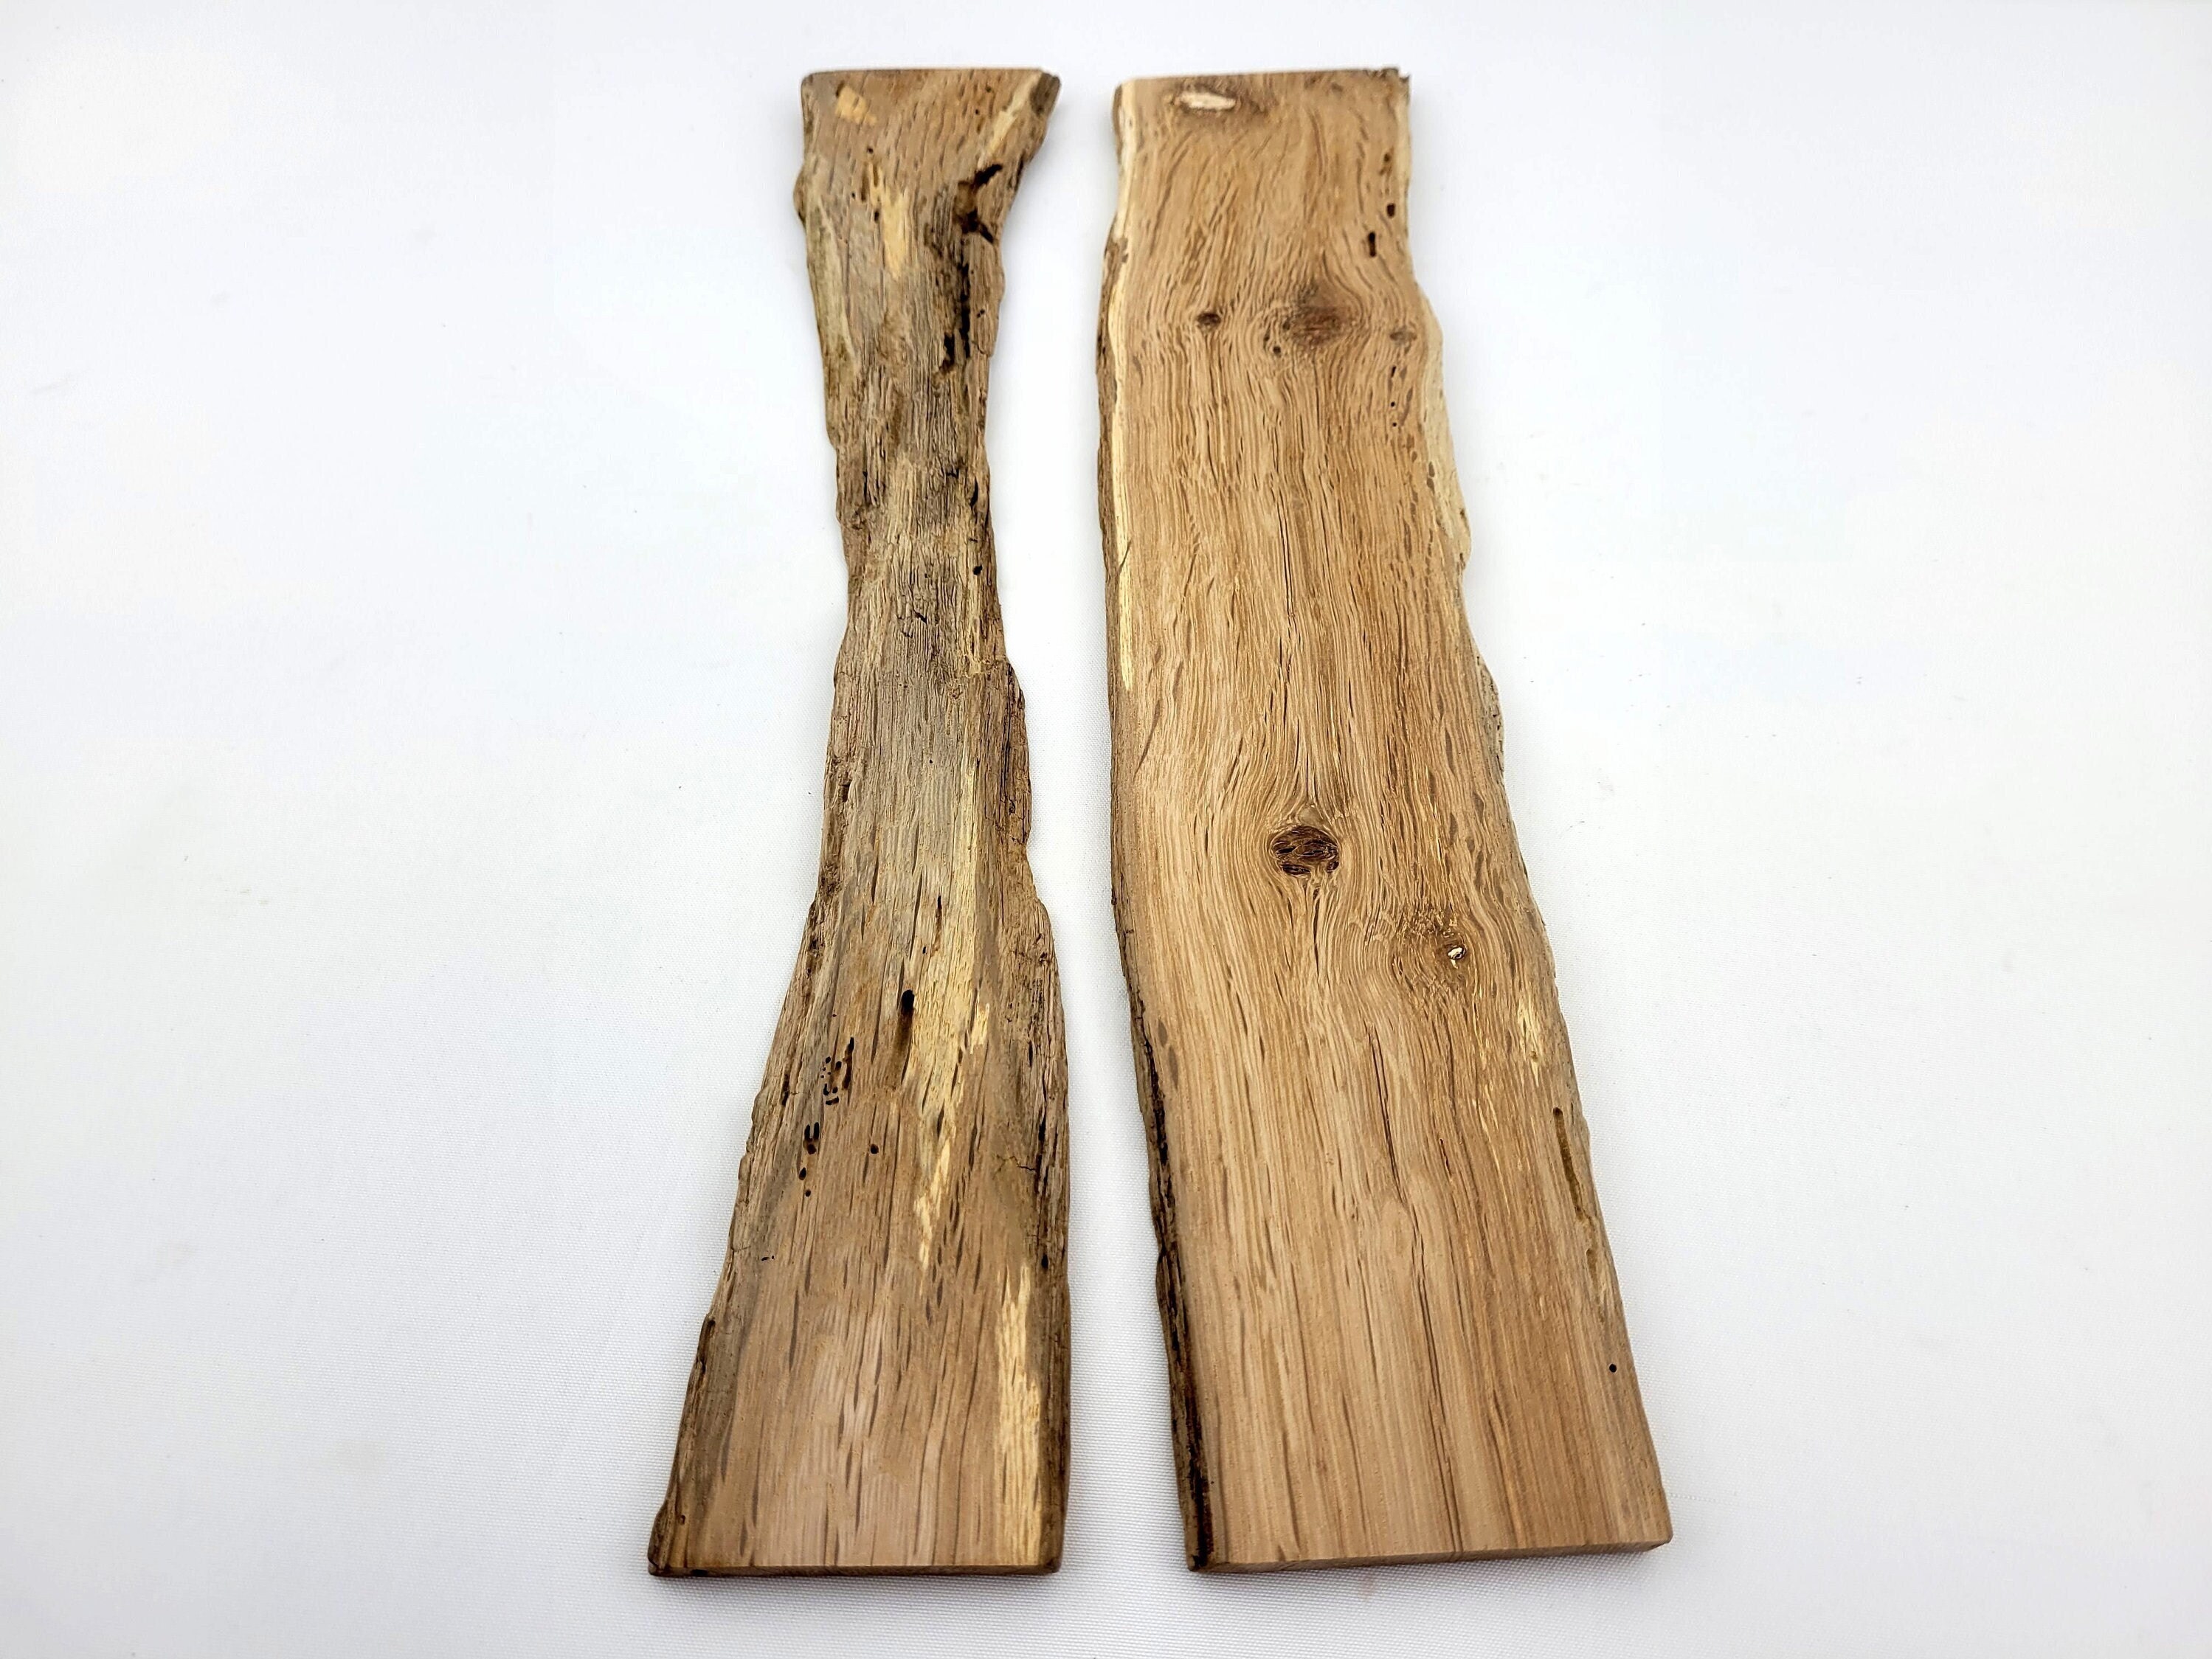 Live Edge Kiln Dried English Timber Hardwood Elm Oak Ash Wood